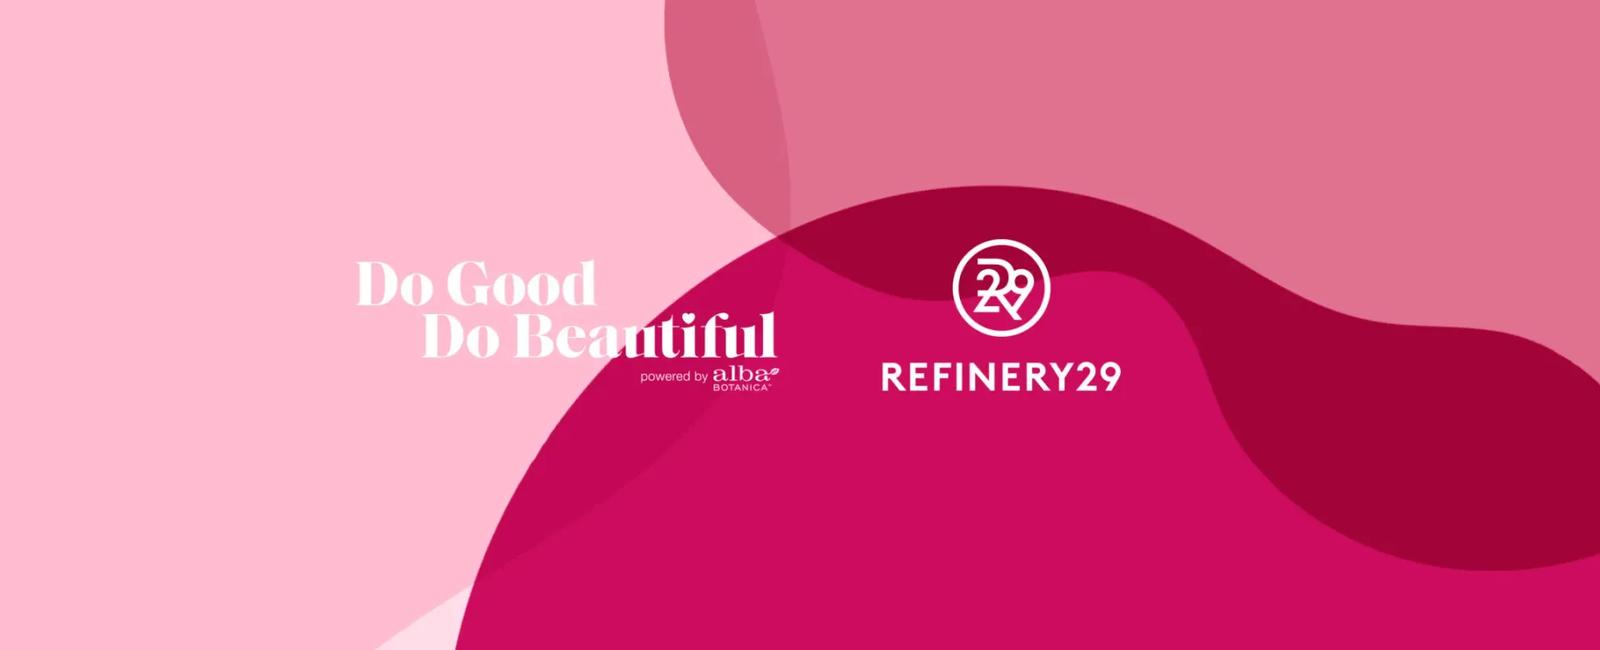 Alba Botanica x Refinery 29: Do Good, do Beautiful